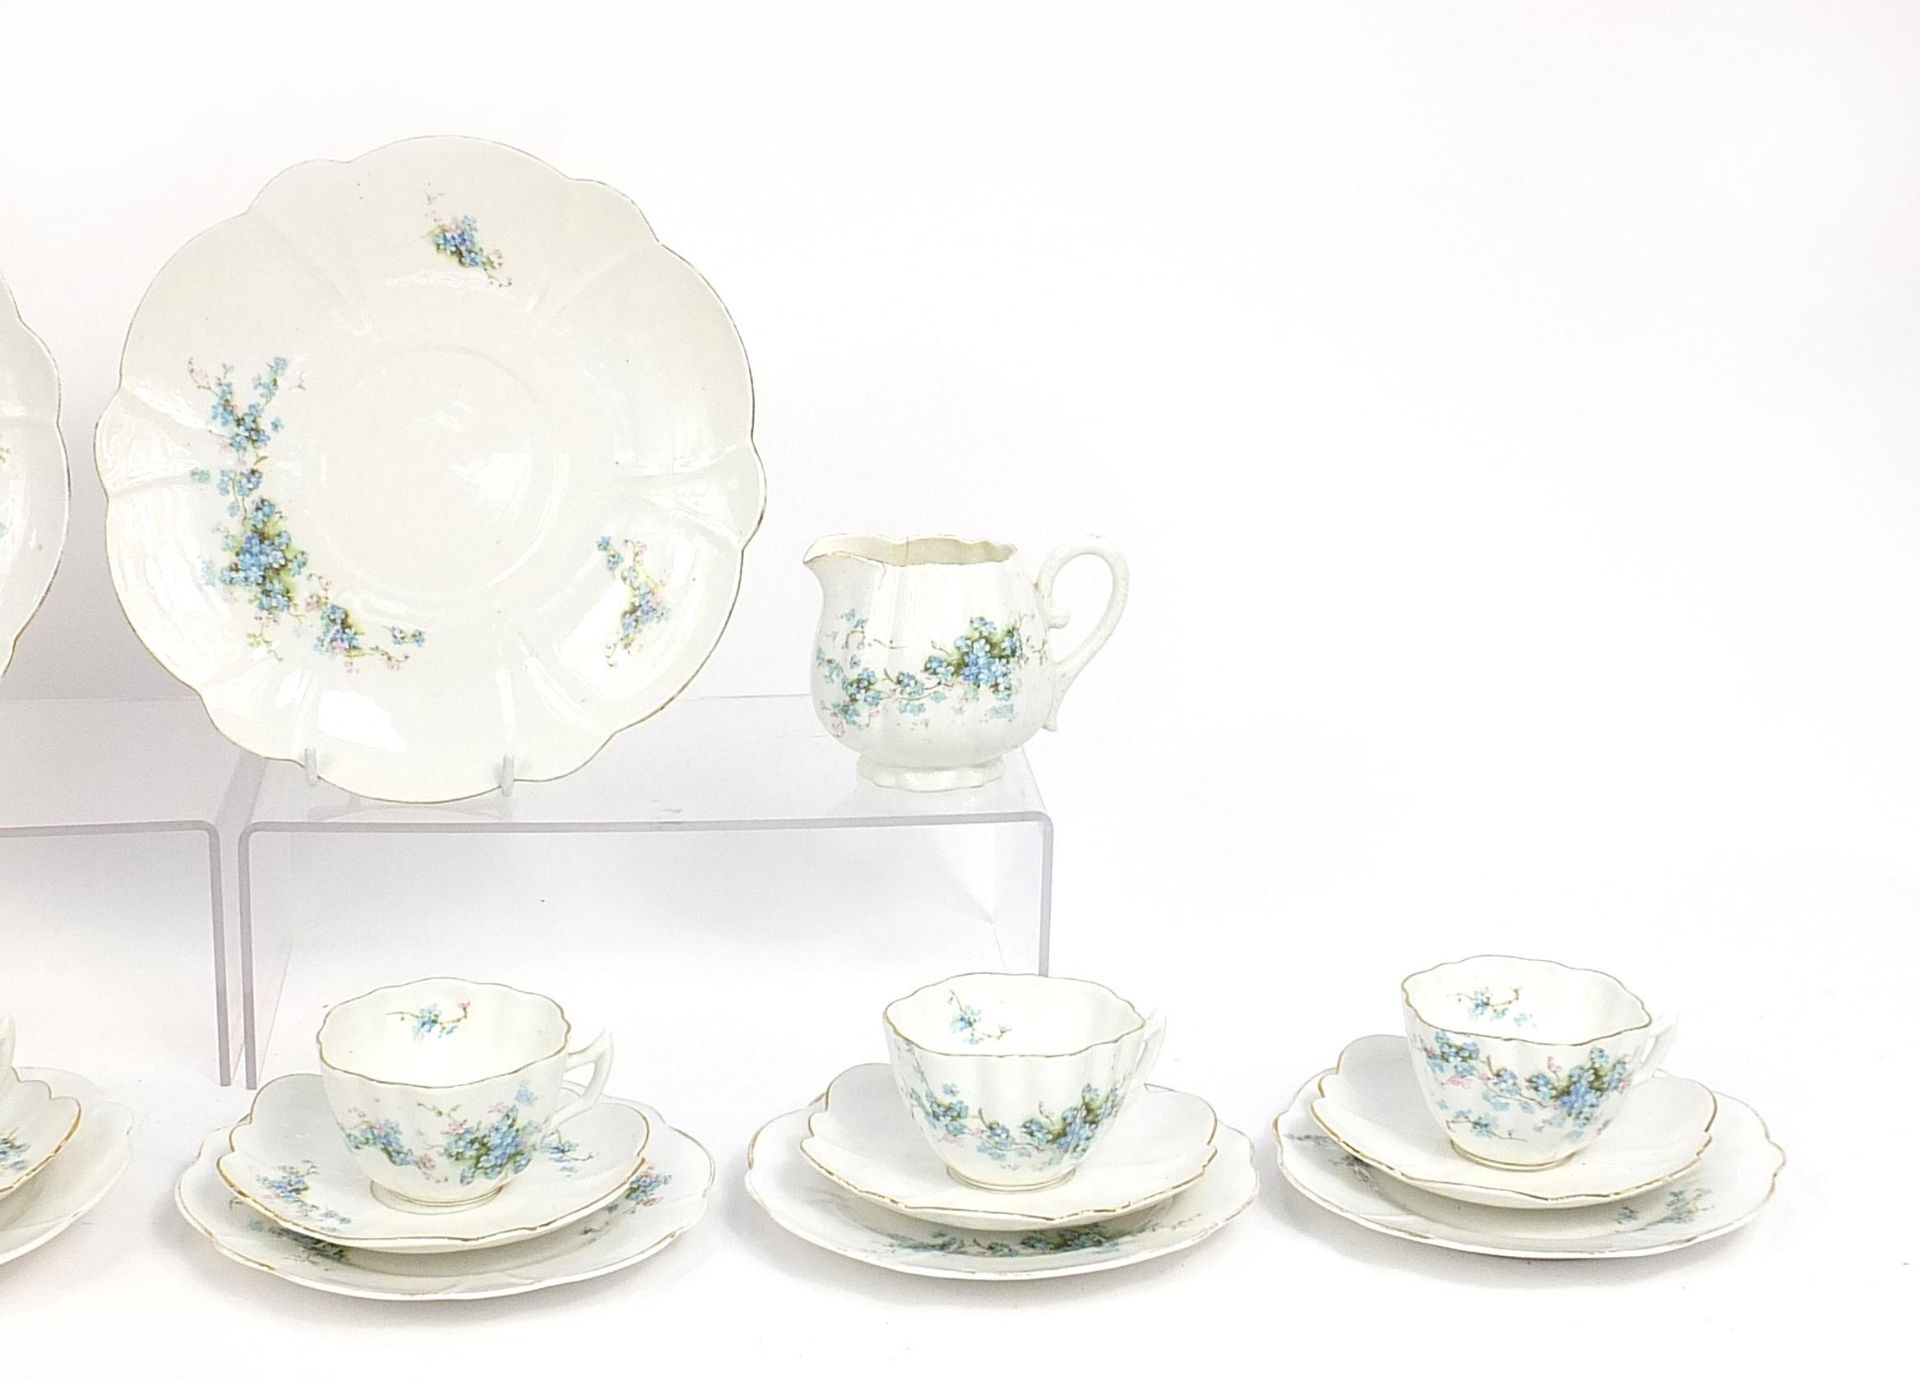 Forget-me-not porcelain fluted six piece tea set - Image 3 of 4